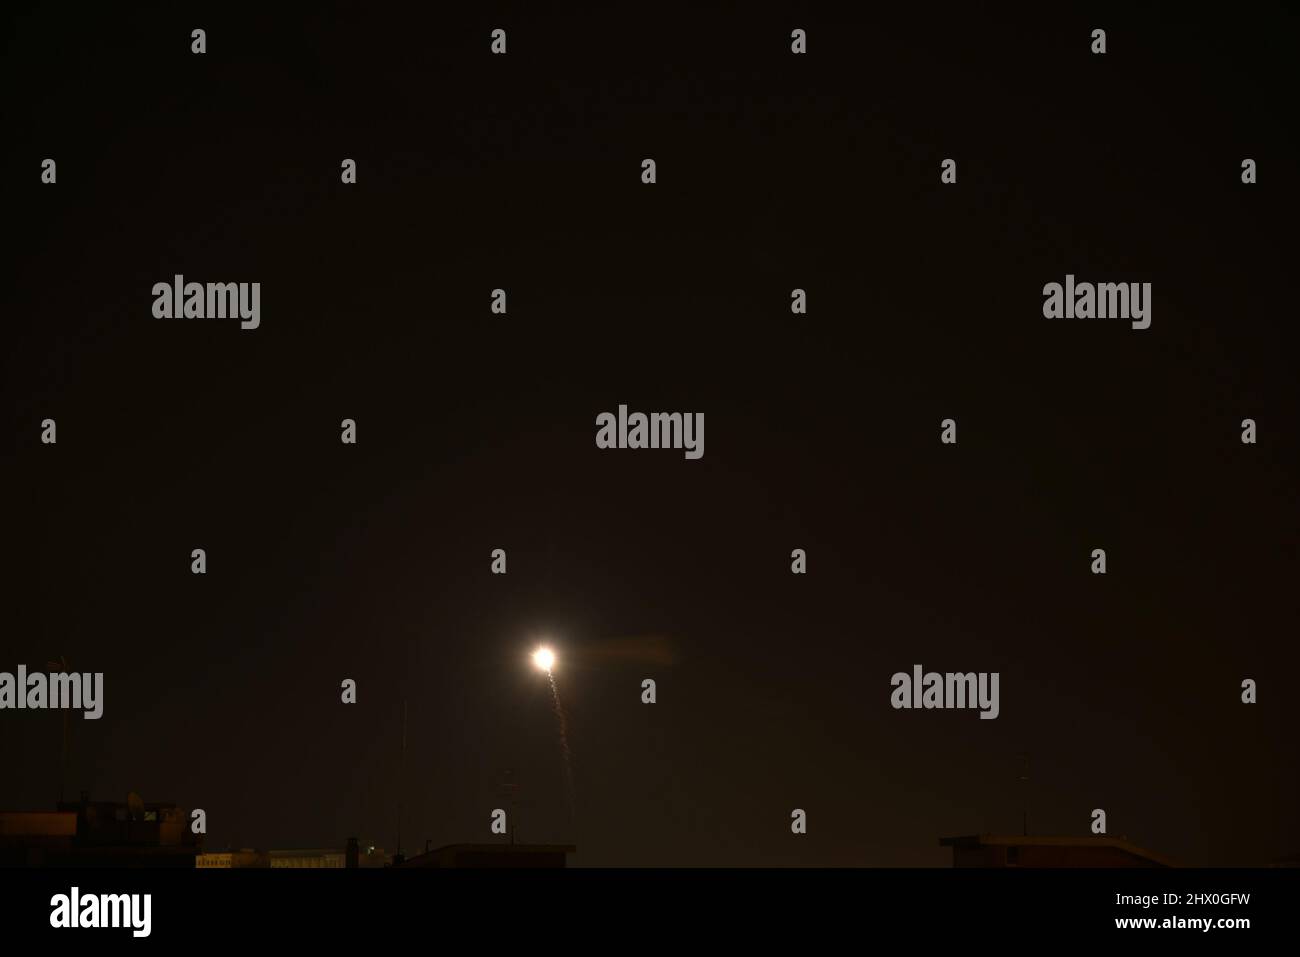 Fireworks by Night on a Black Sky Background Stock Photo